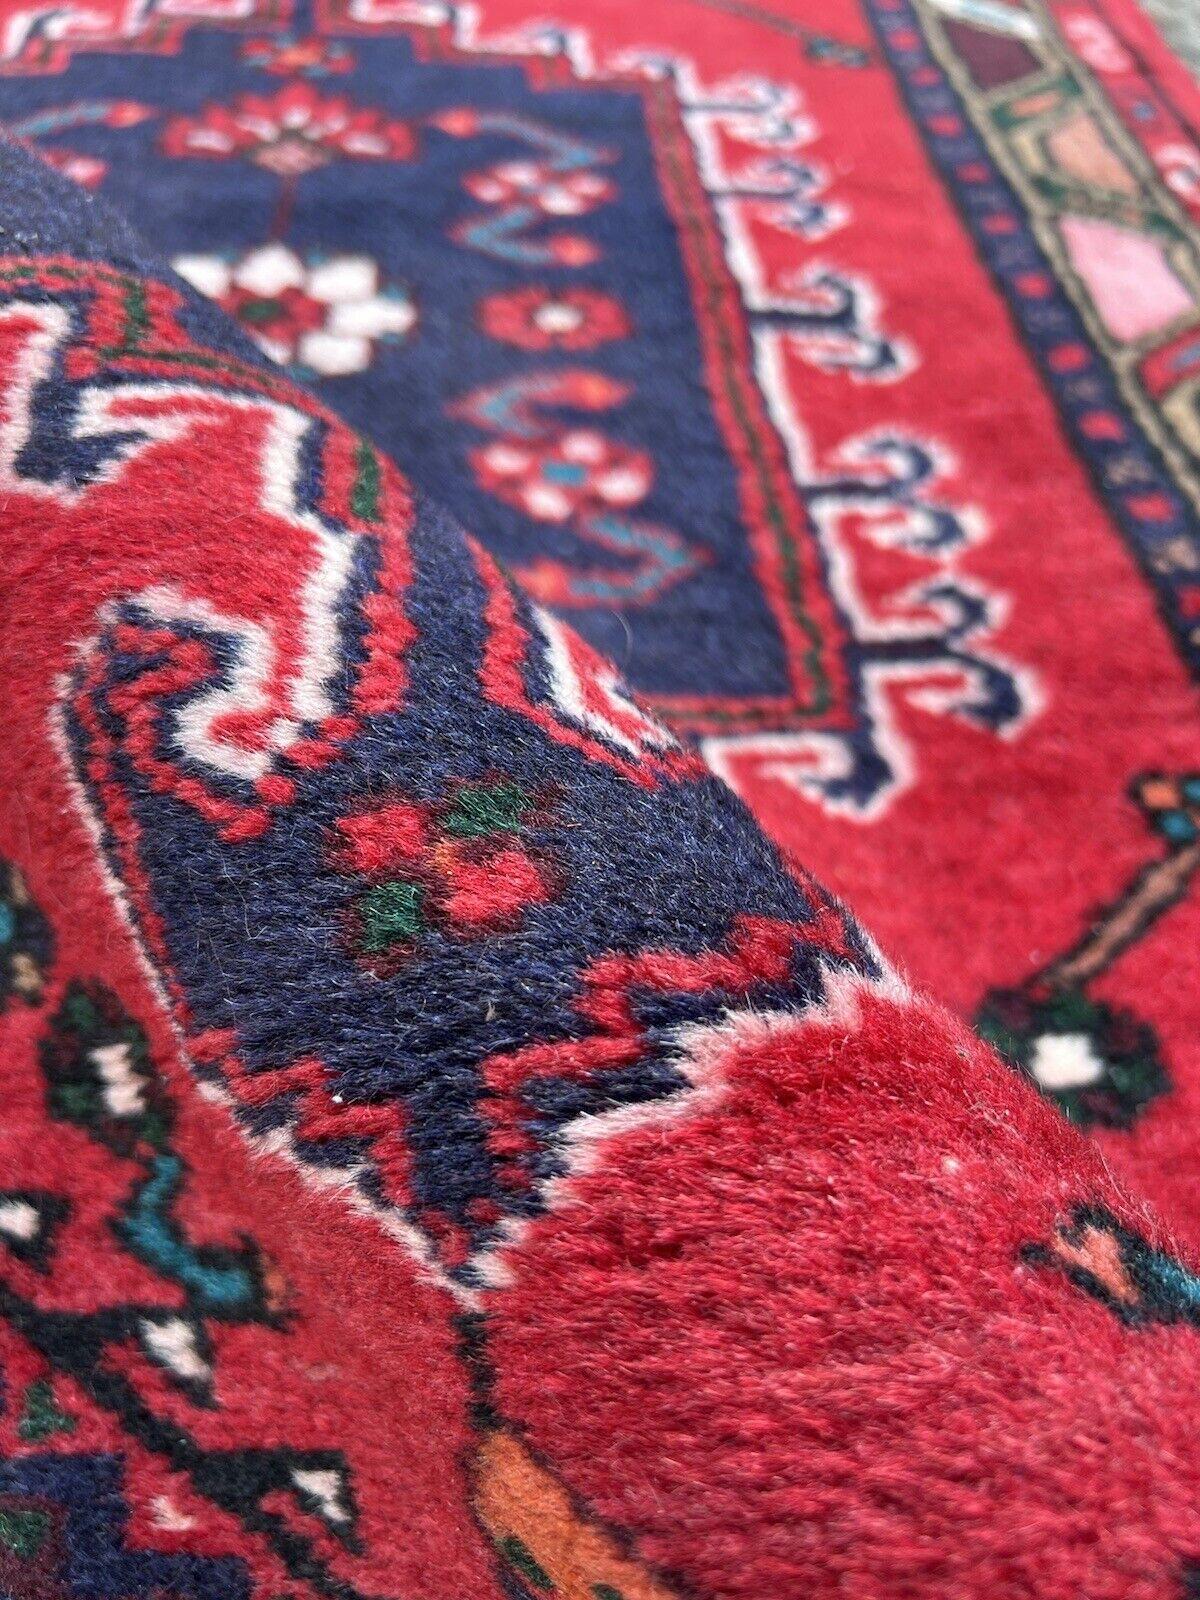 Handmade Vintage Persian Style Hamadan Rug 2.3' x 4', 1970s - 1S58 For Sale 1